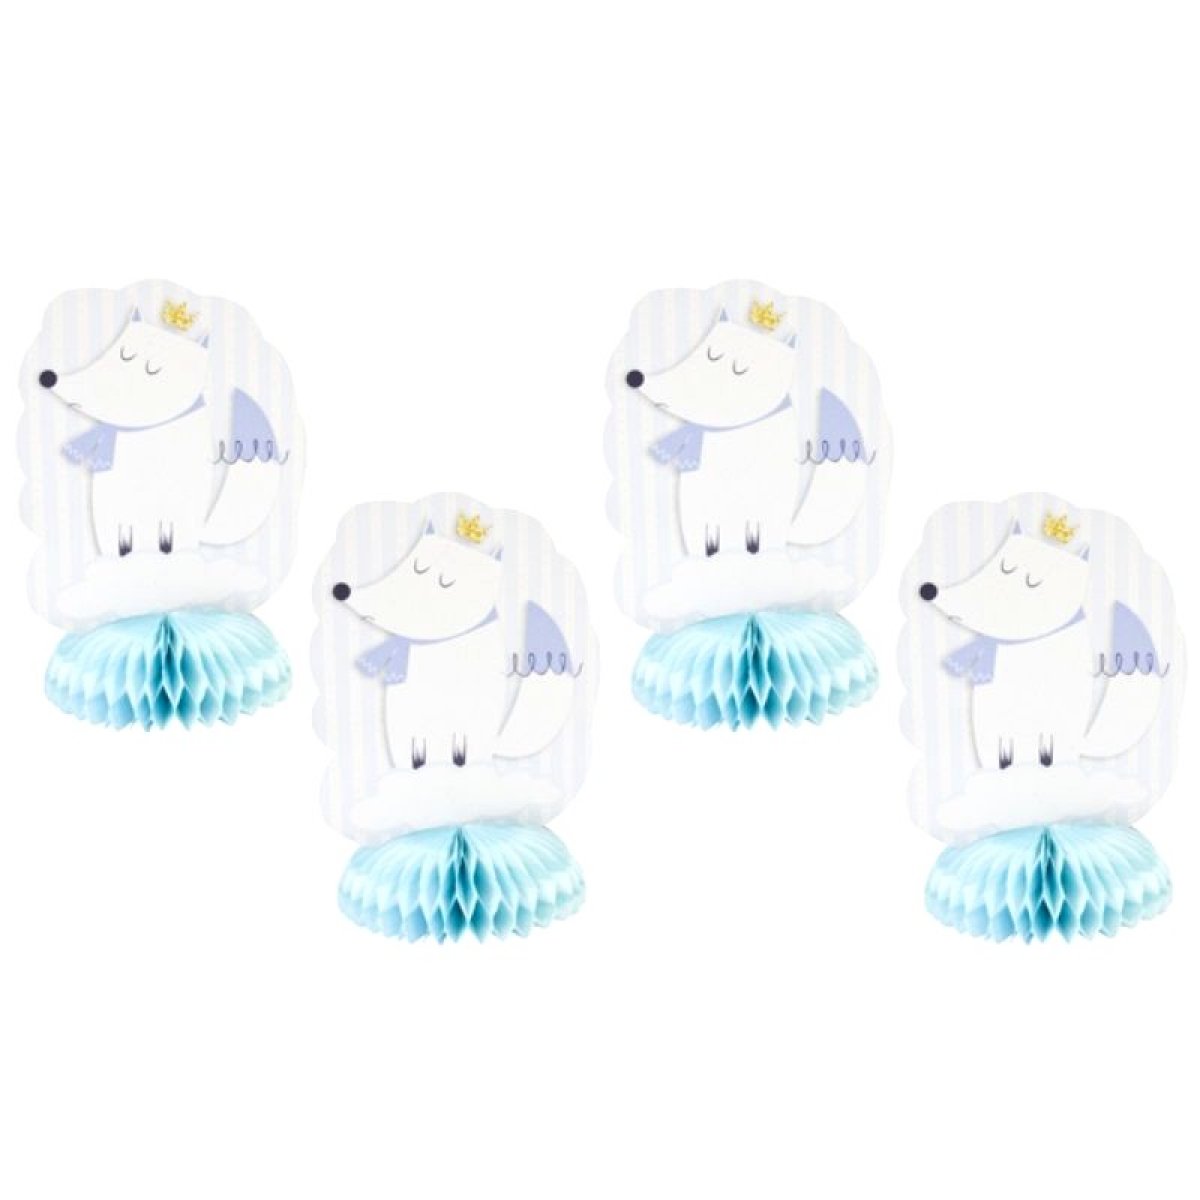 Centres de Table - Baby Shower - Renard Bleu Ciel x 4 pièces